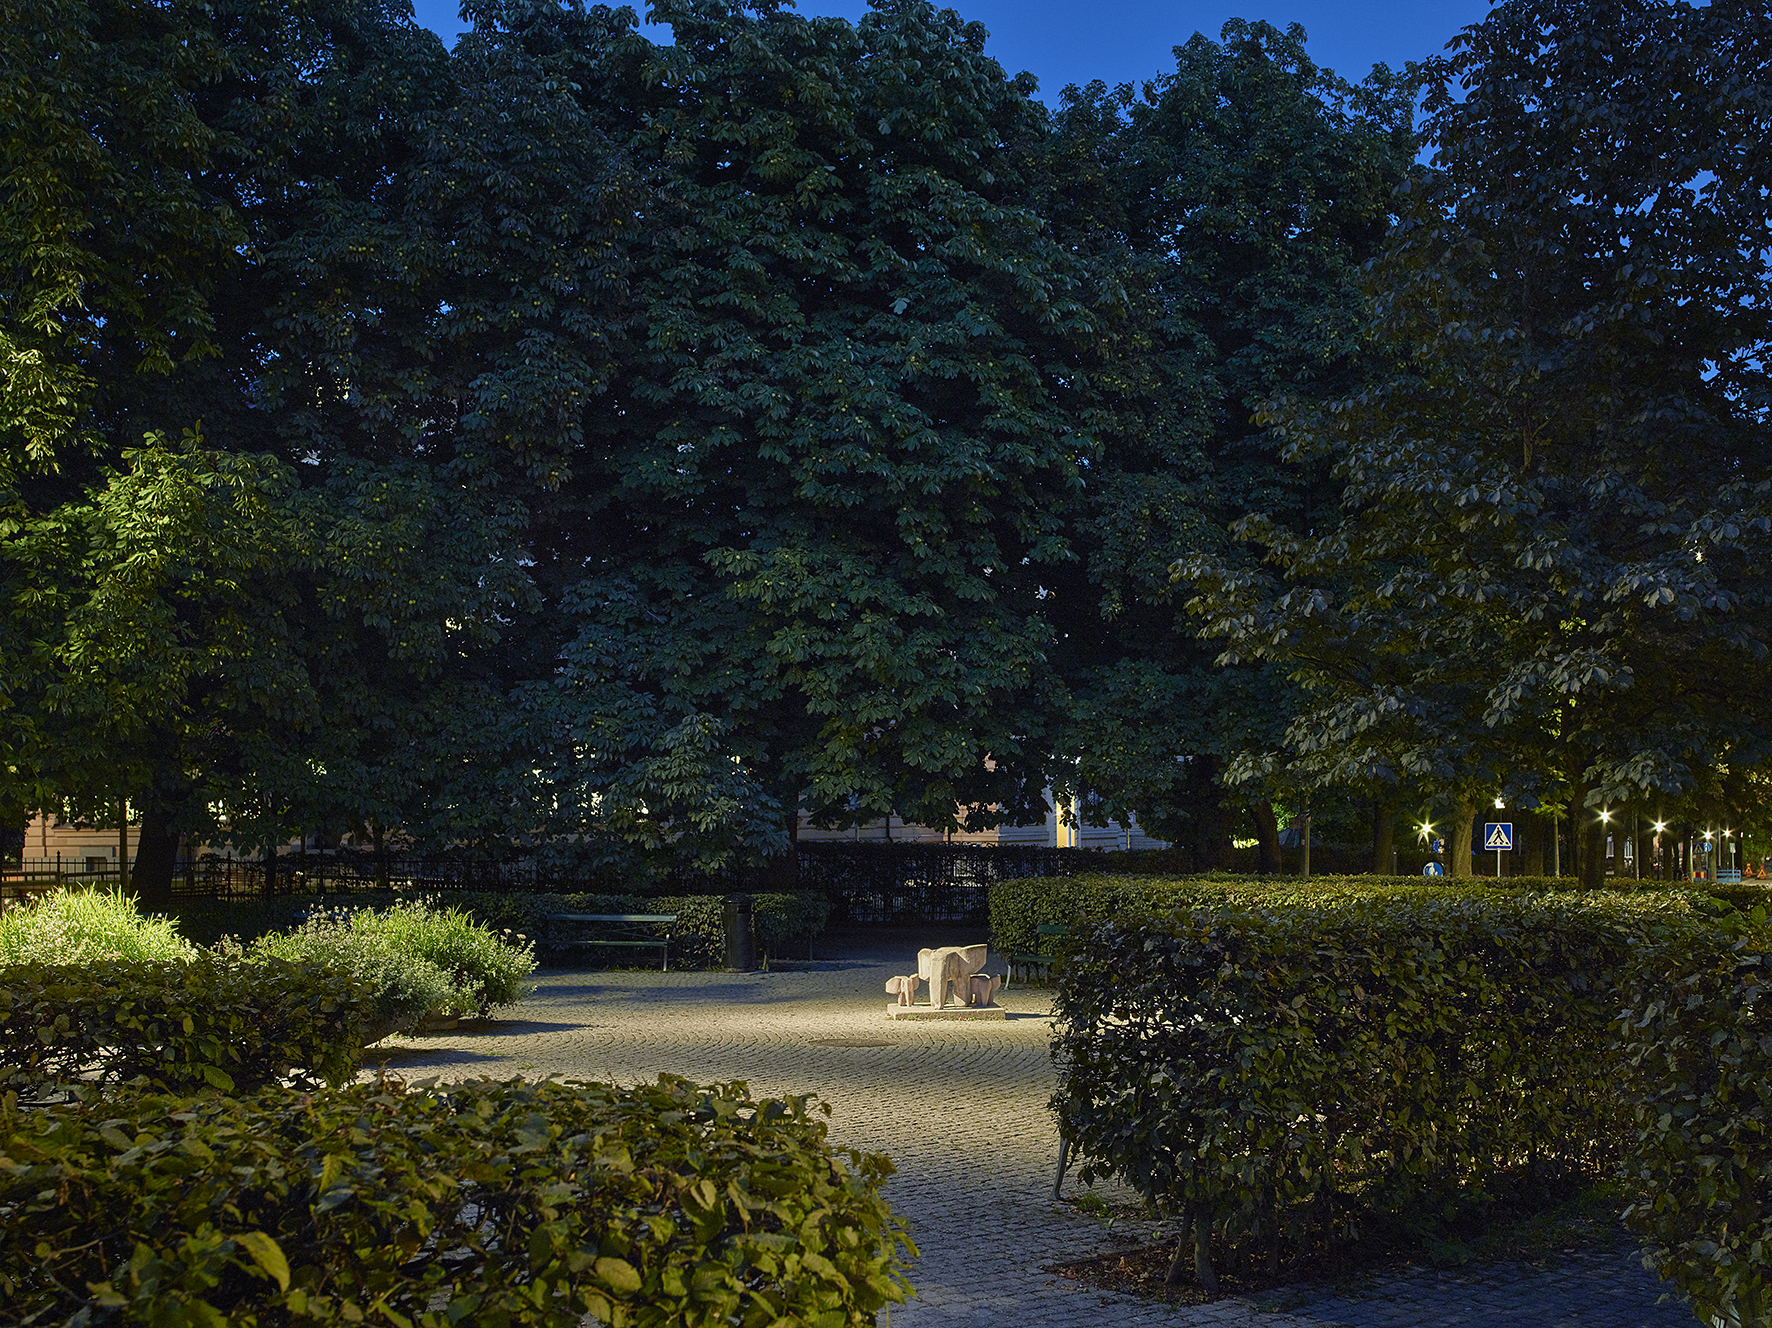 park at night